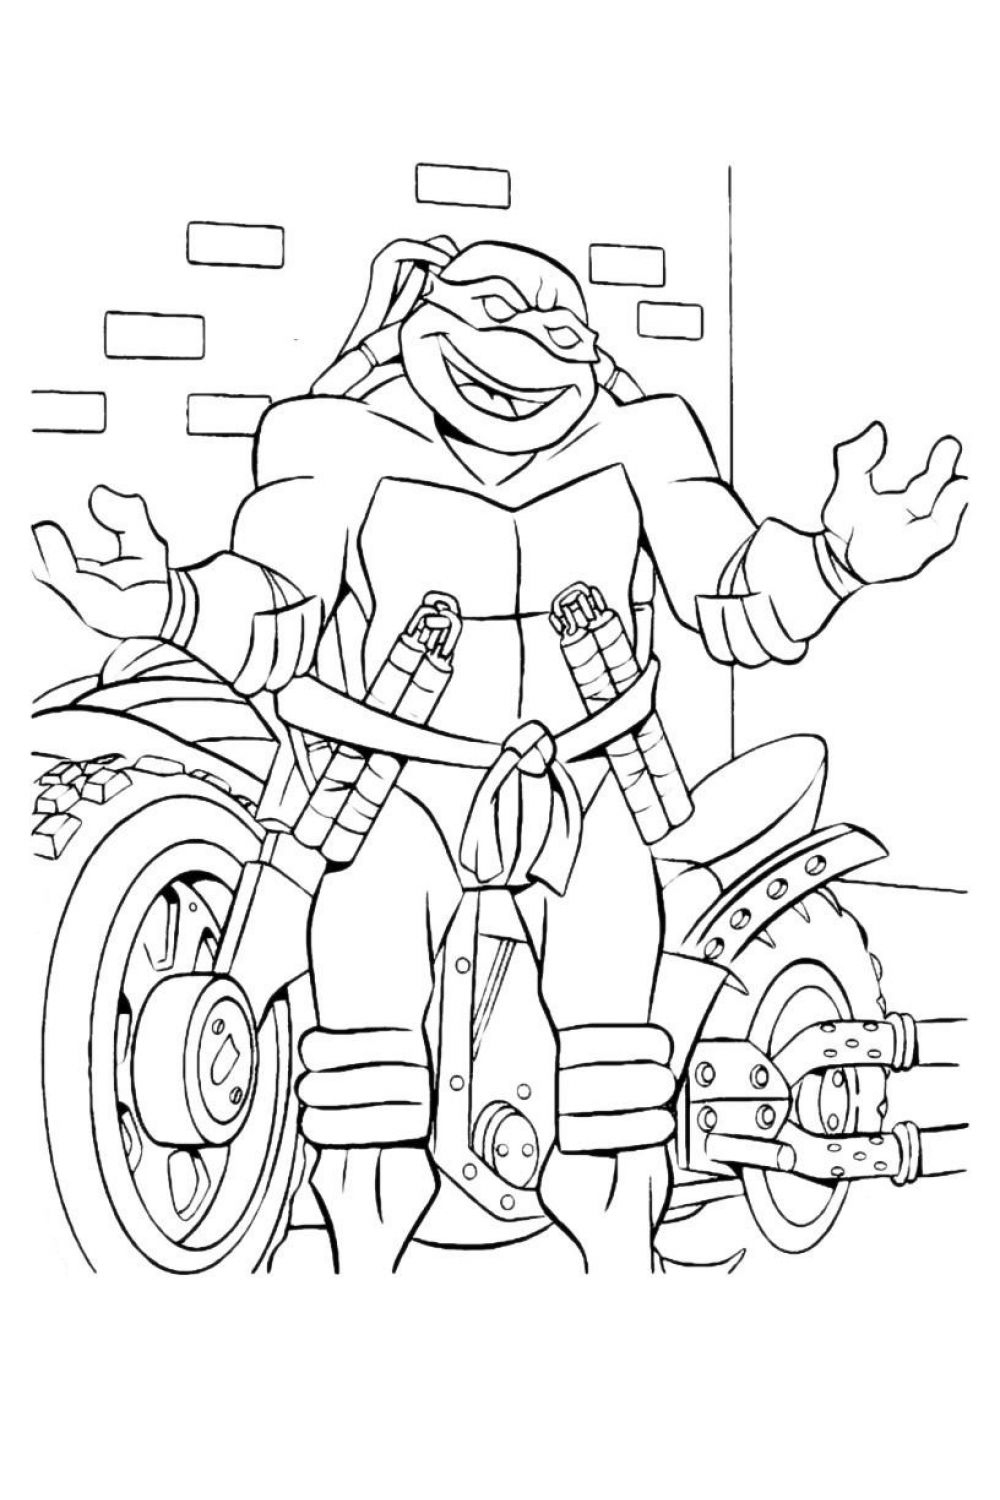 Para Colorear Ninja Turtles de dibujos animados.